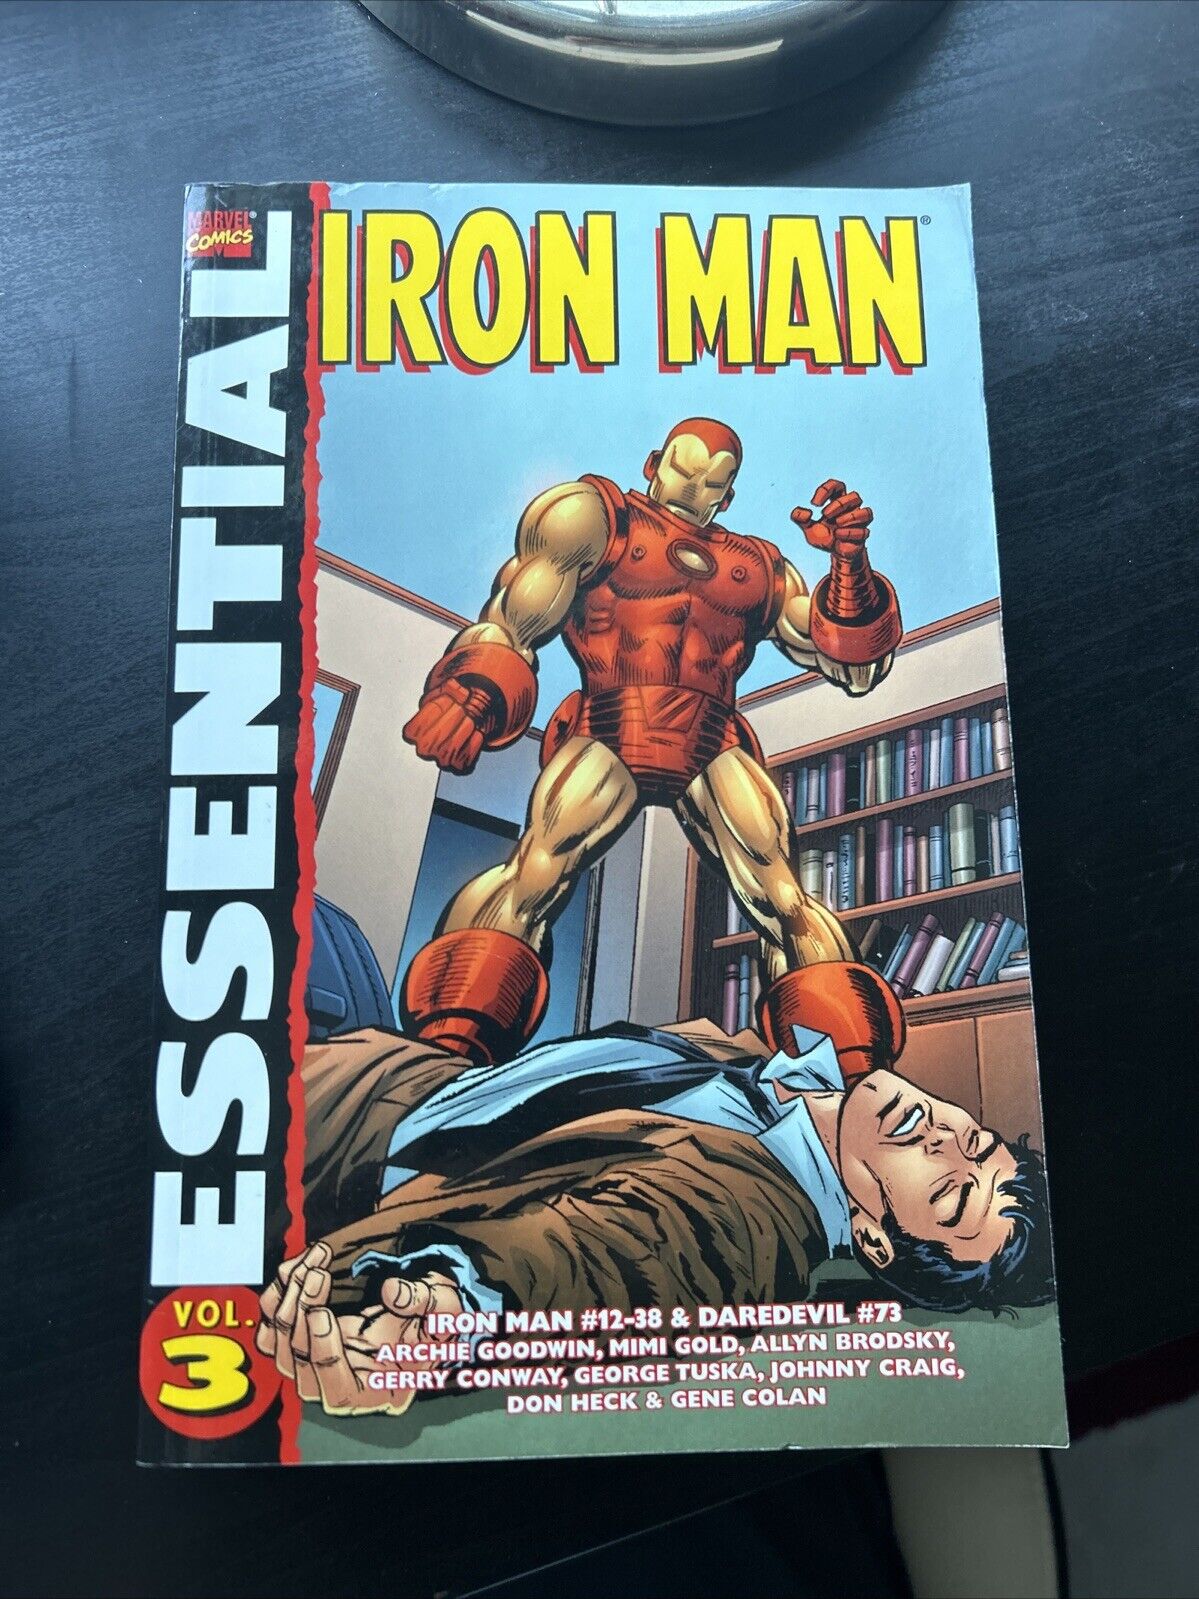 Essential Iron Man #3 (Marvel Comics April 2008)—VERY GOOD